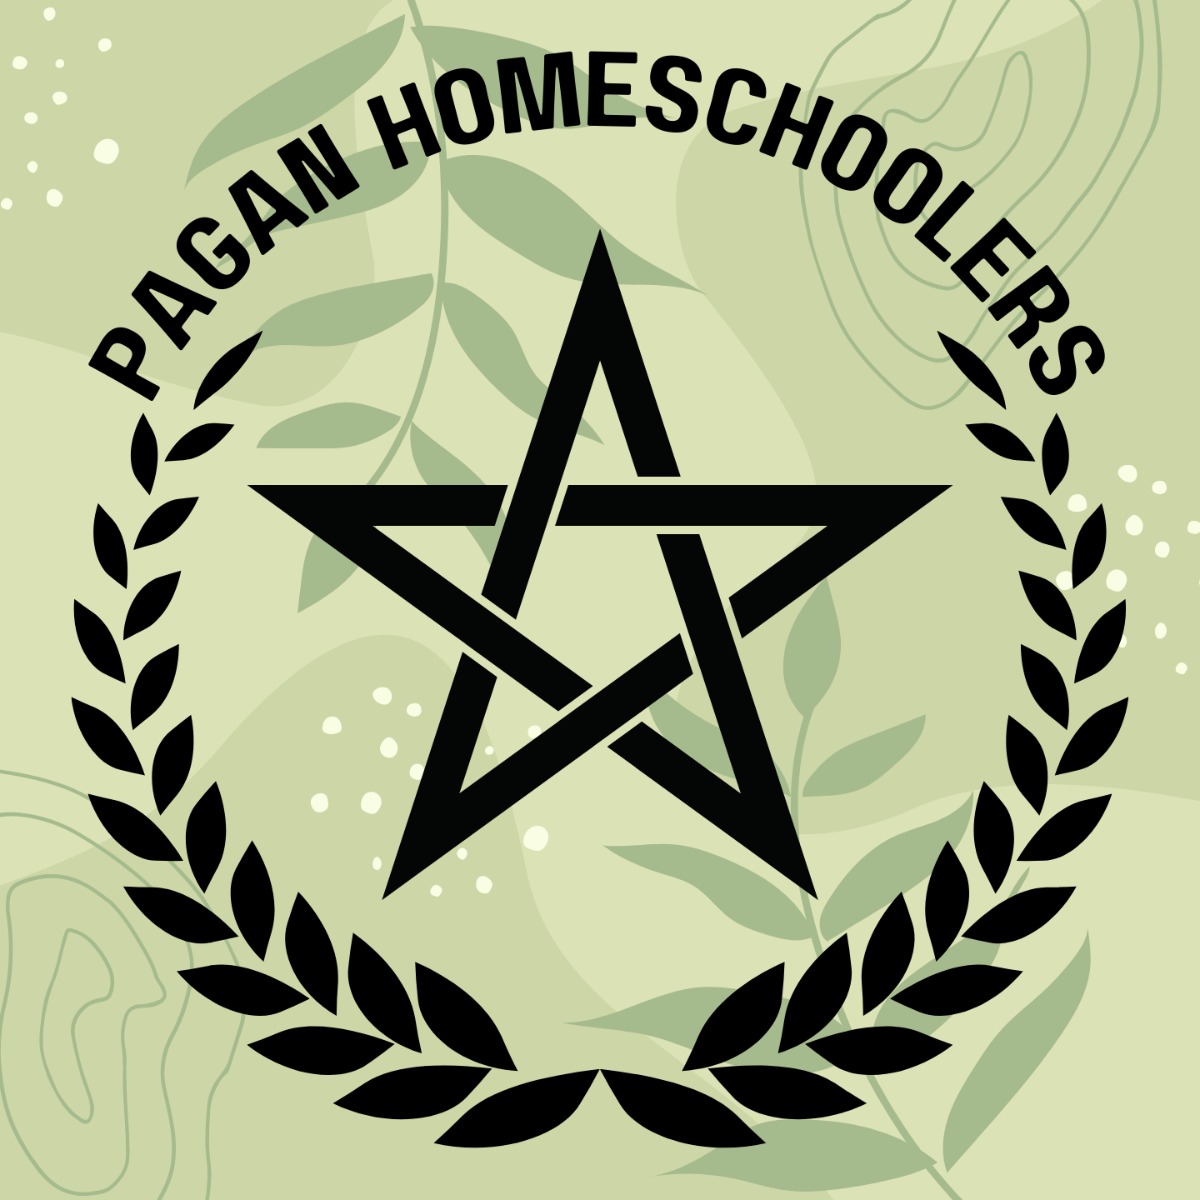 Pagan Homeschoolers